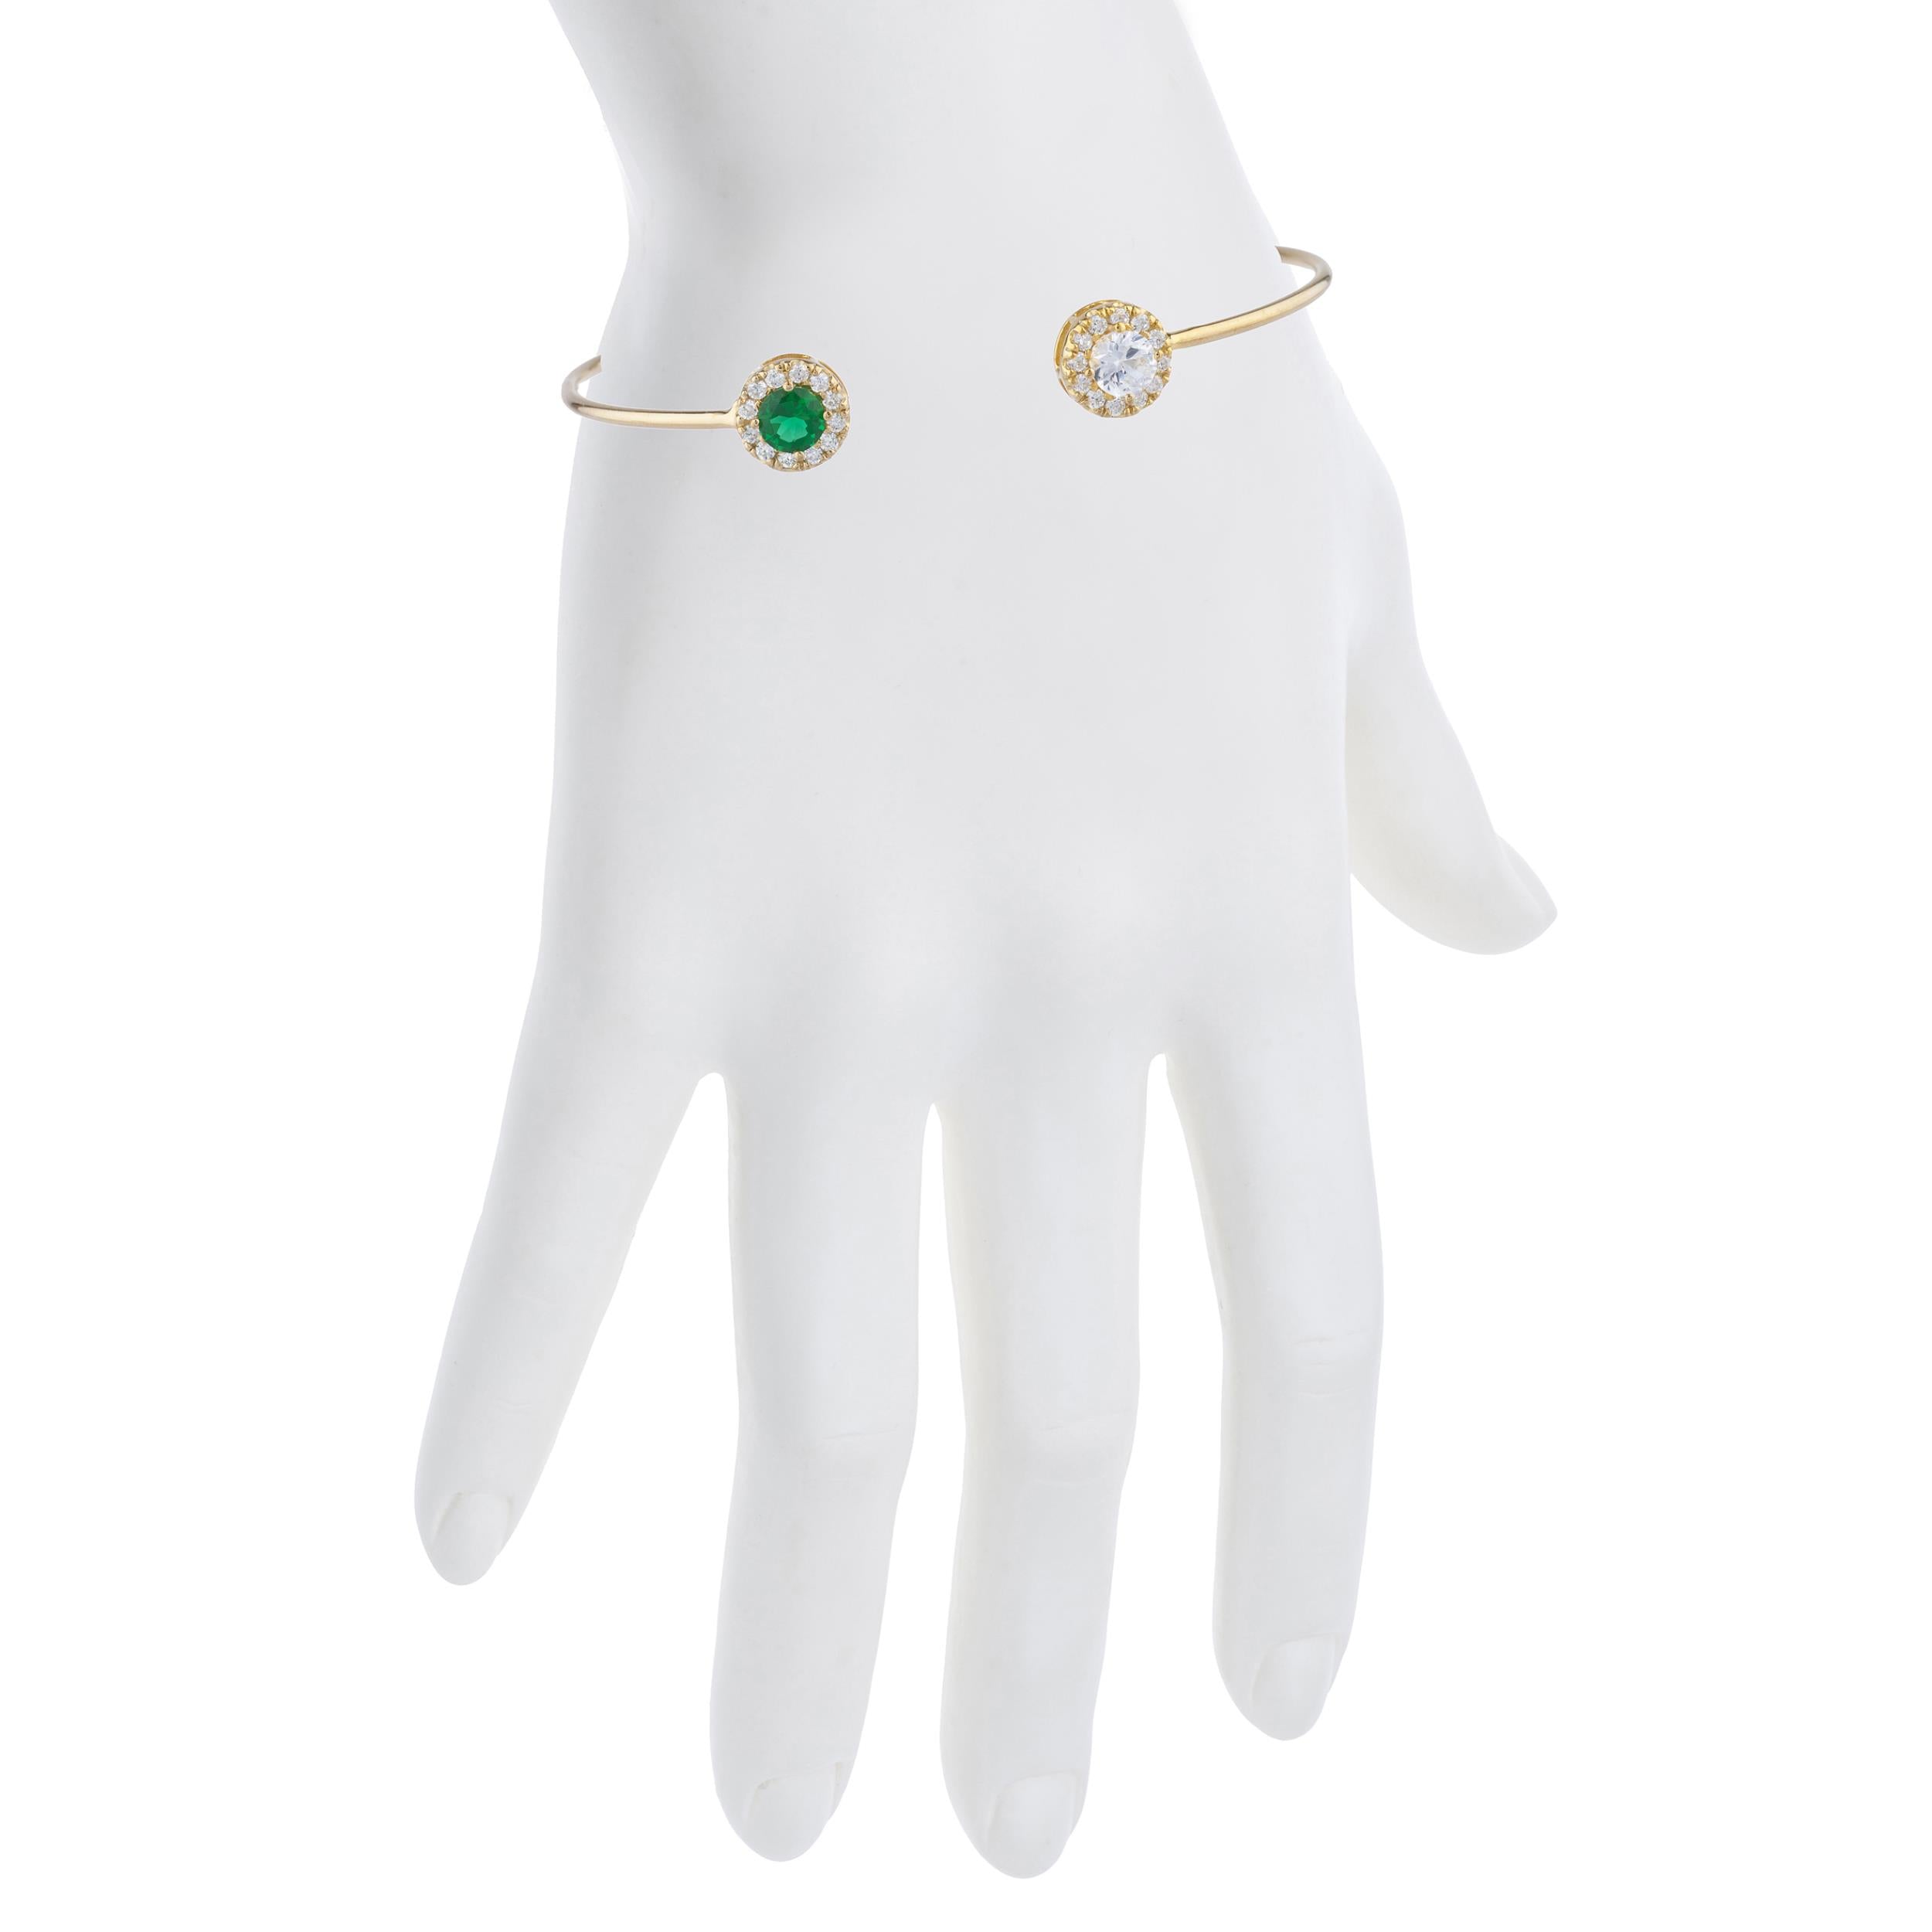 1 Ct Emerald & Zirconia Halo Design Round Bangle Bracelet 14Kt Yellow Gold Rose Gold Silver